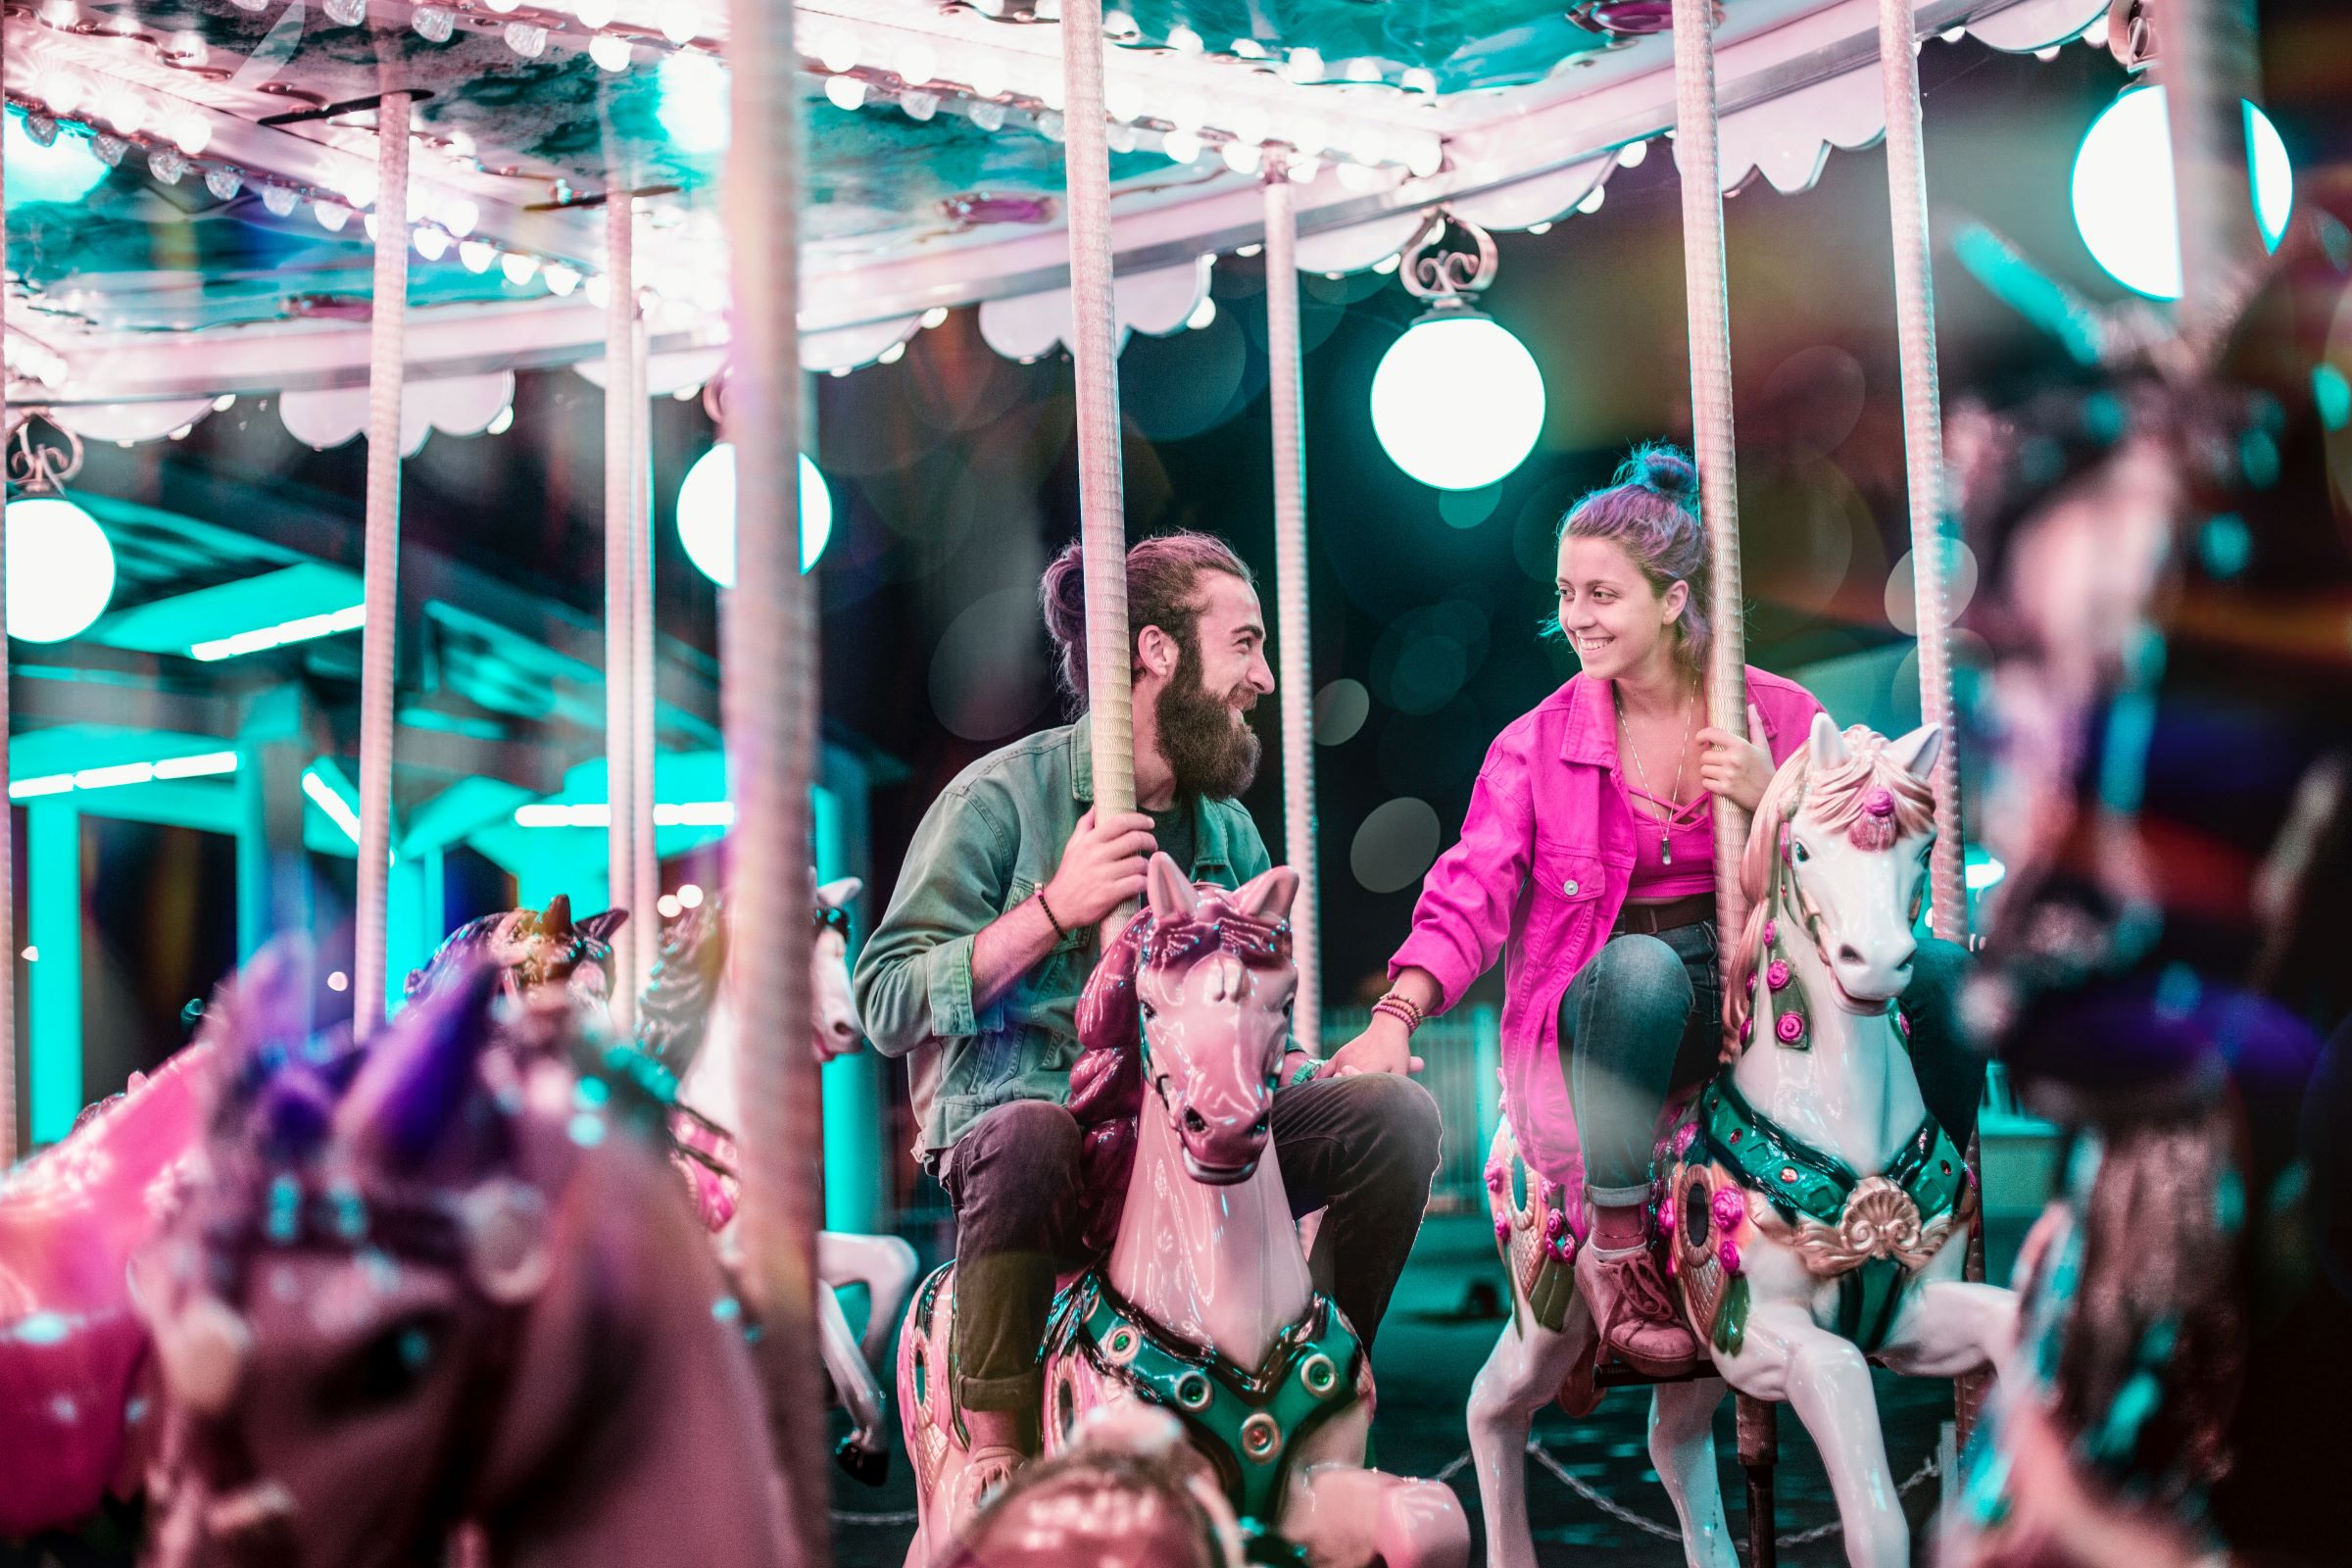 A couple having fun on a carousel. | Source: Unsplash